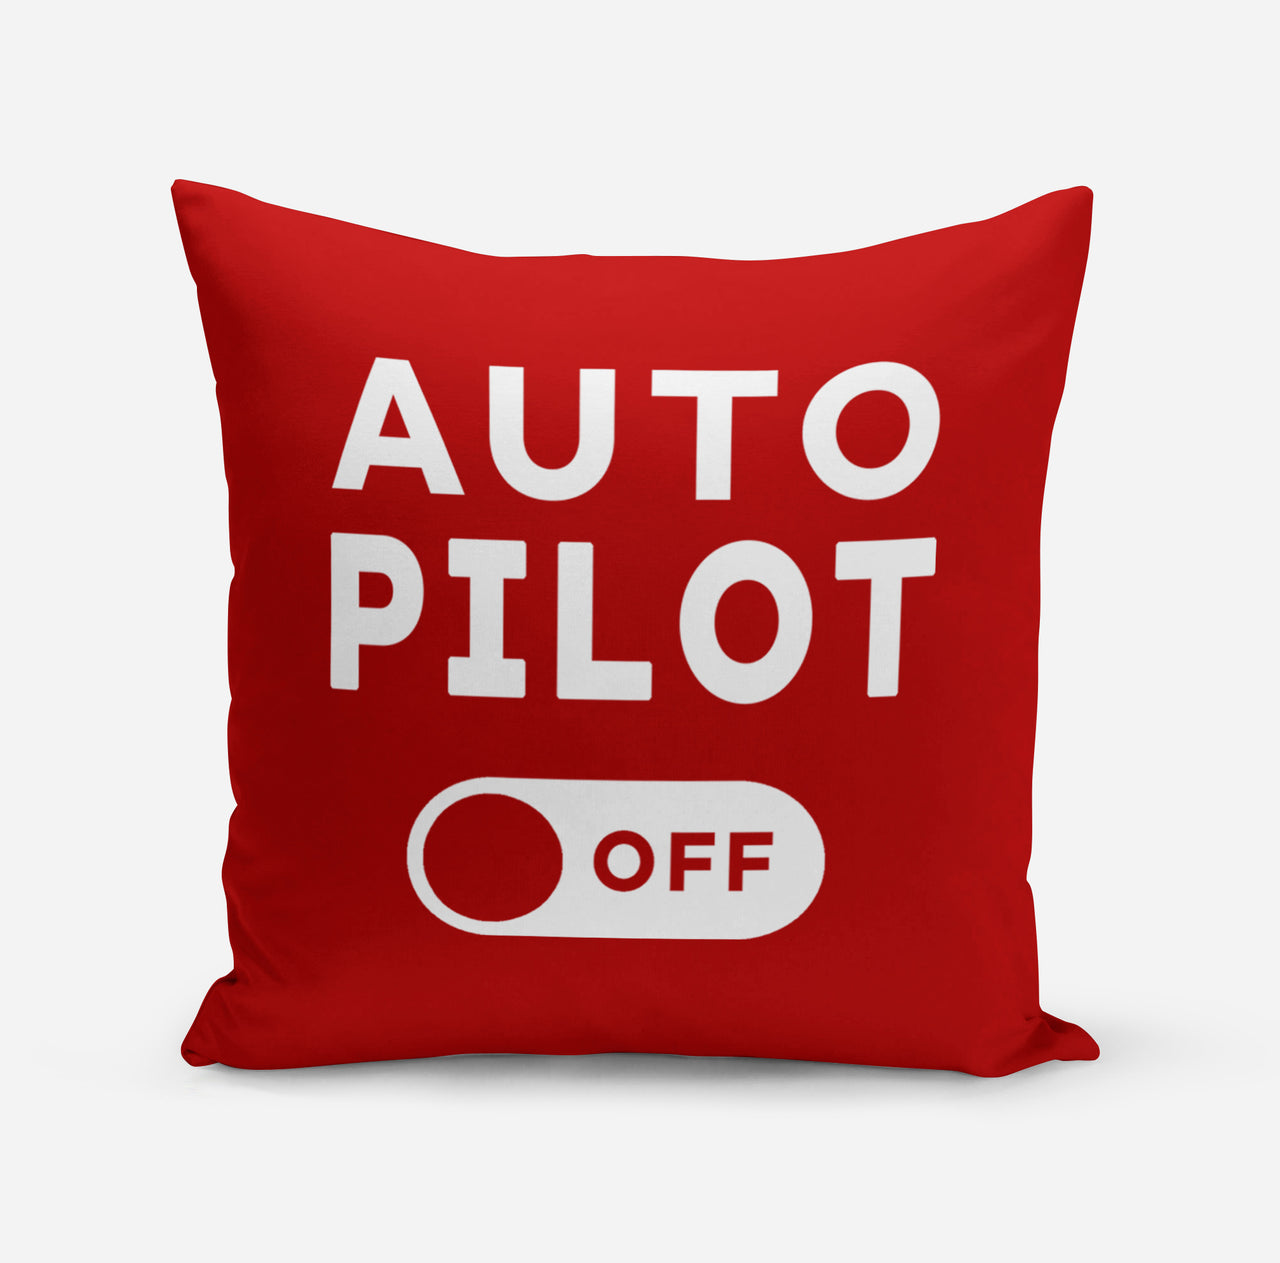 Auto Pilot Off Designed Pillows